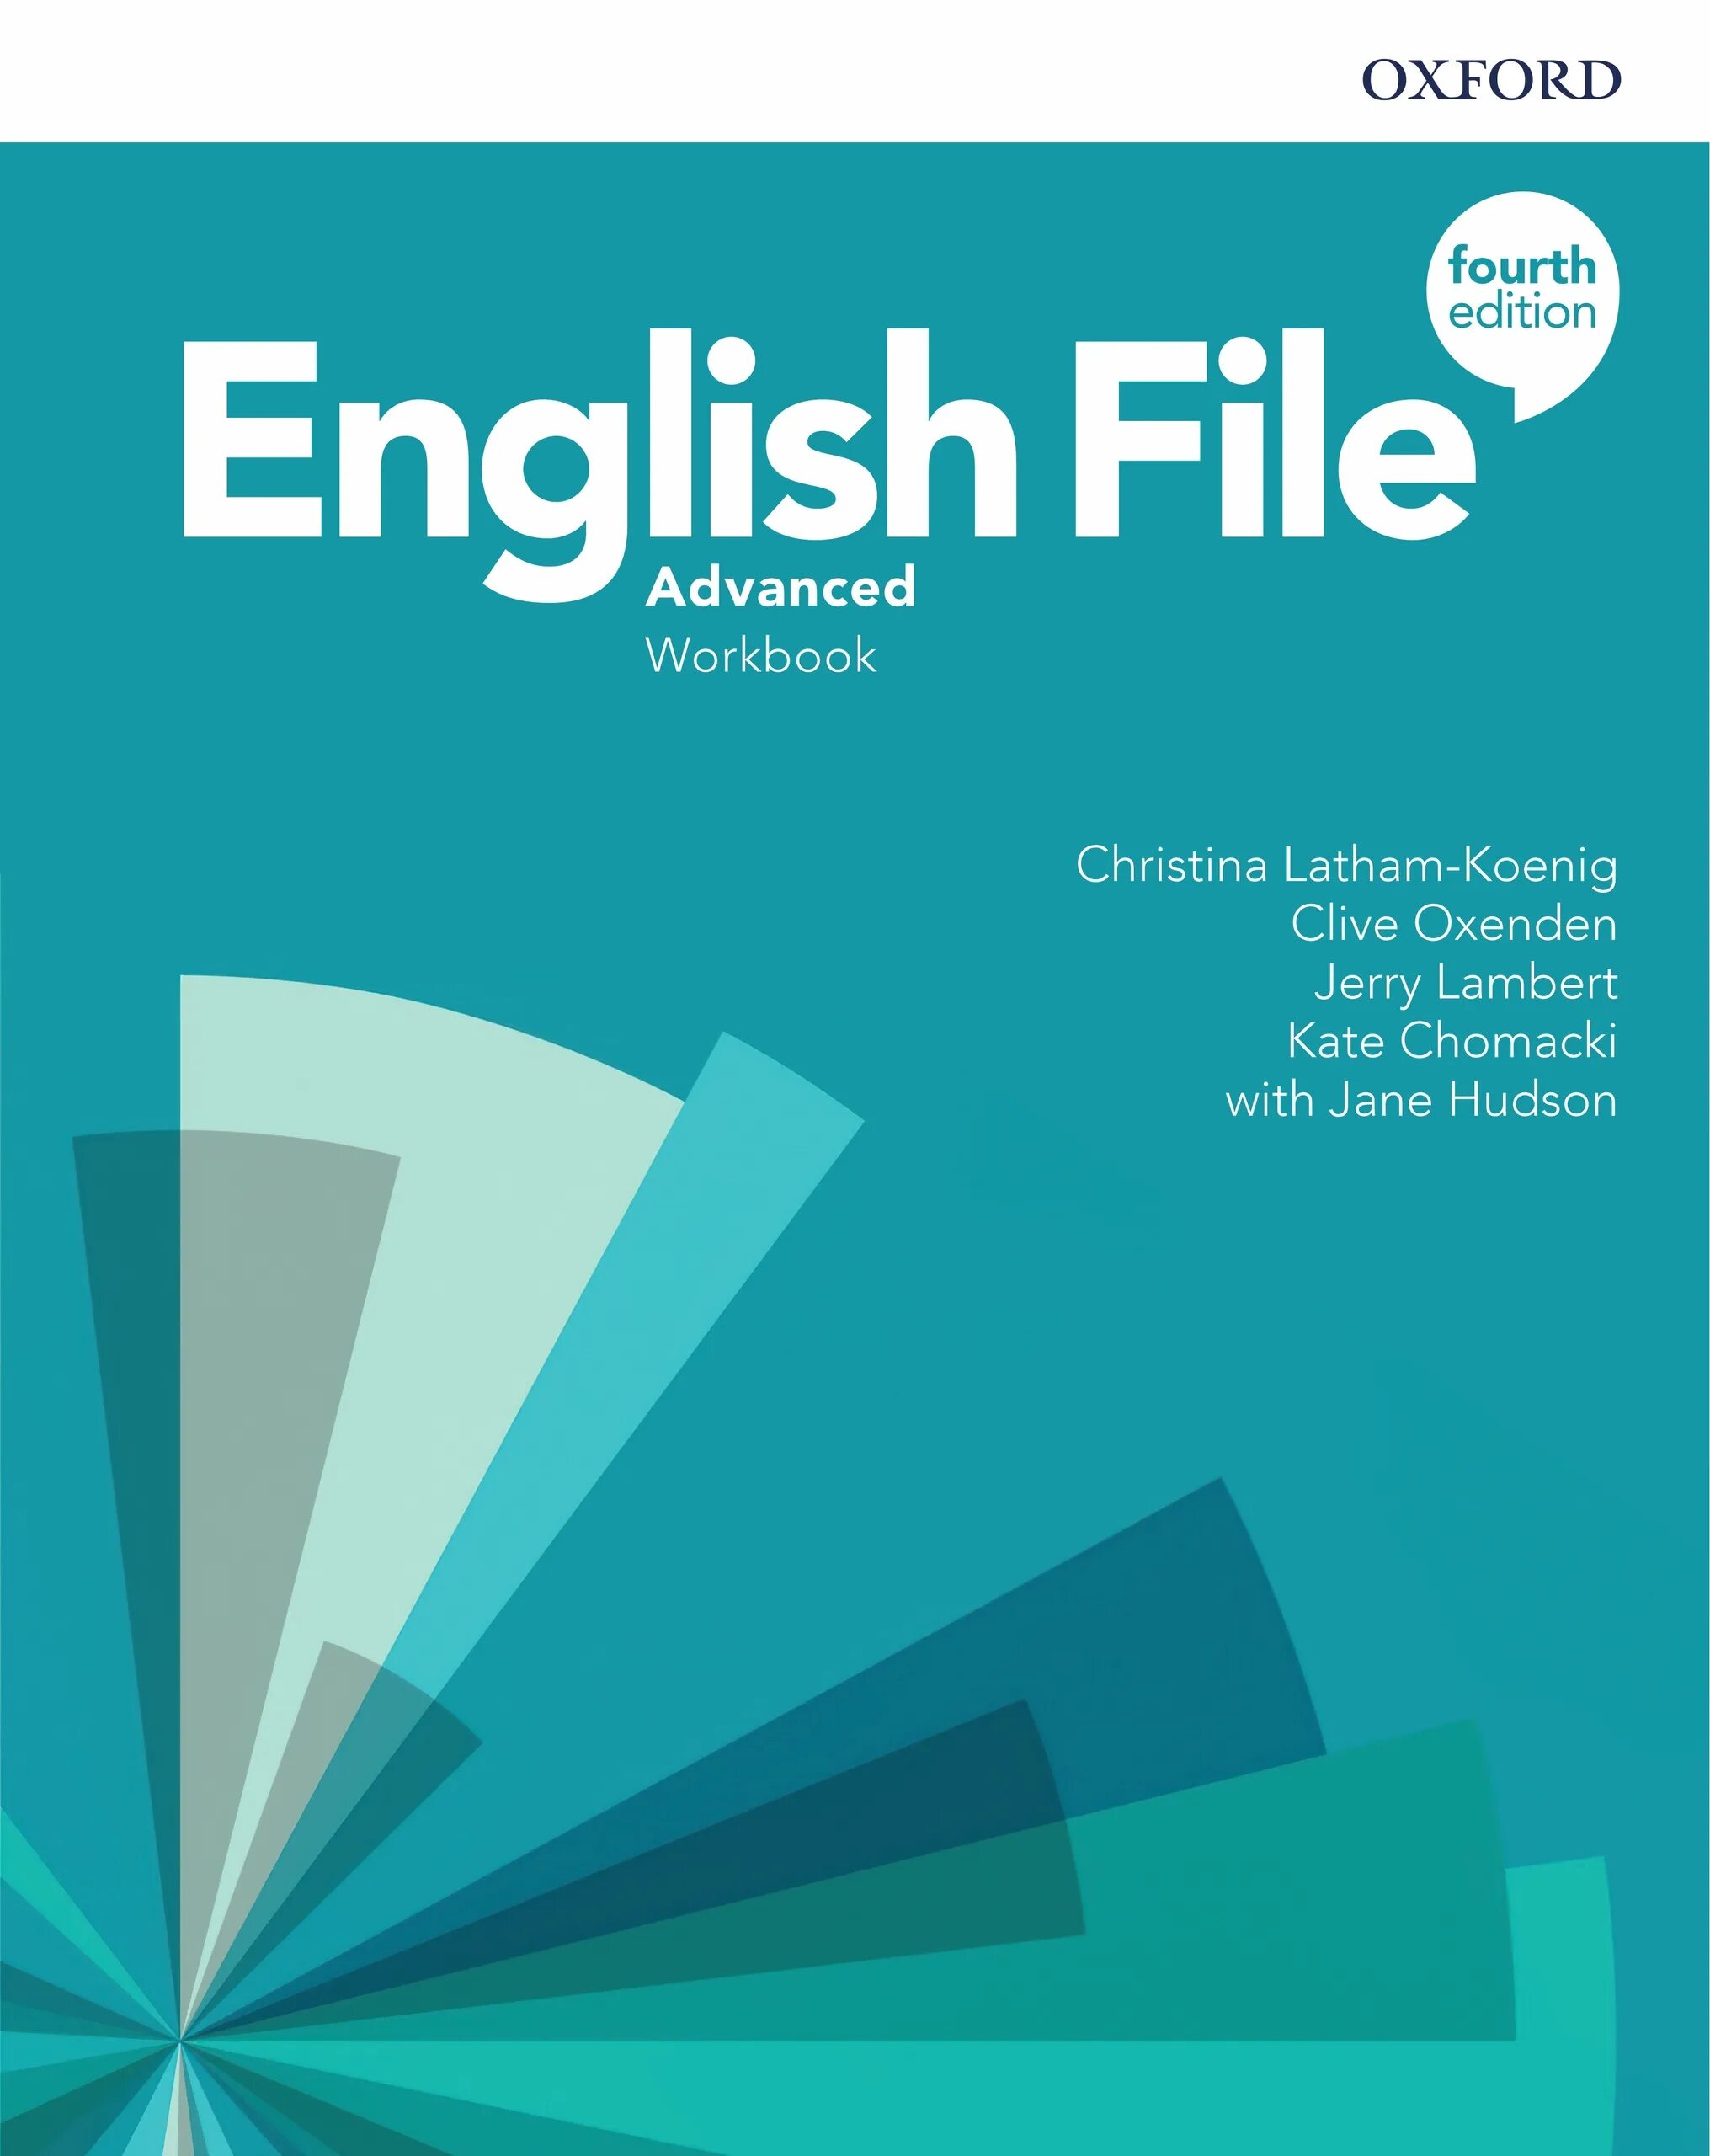 English file intermediate workbook keys. English file Advanced 4th. English file Advanced 4th Edition. English file 4 Advanced. English file Advanced Plus.